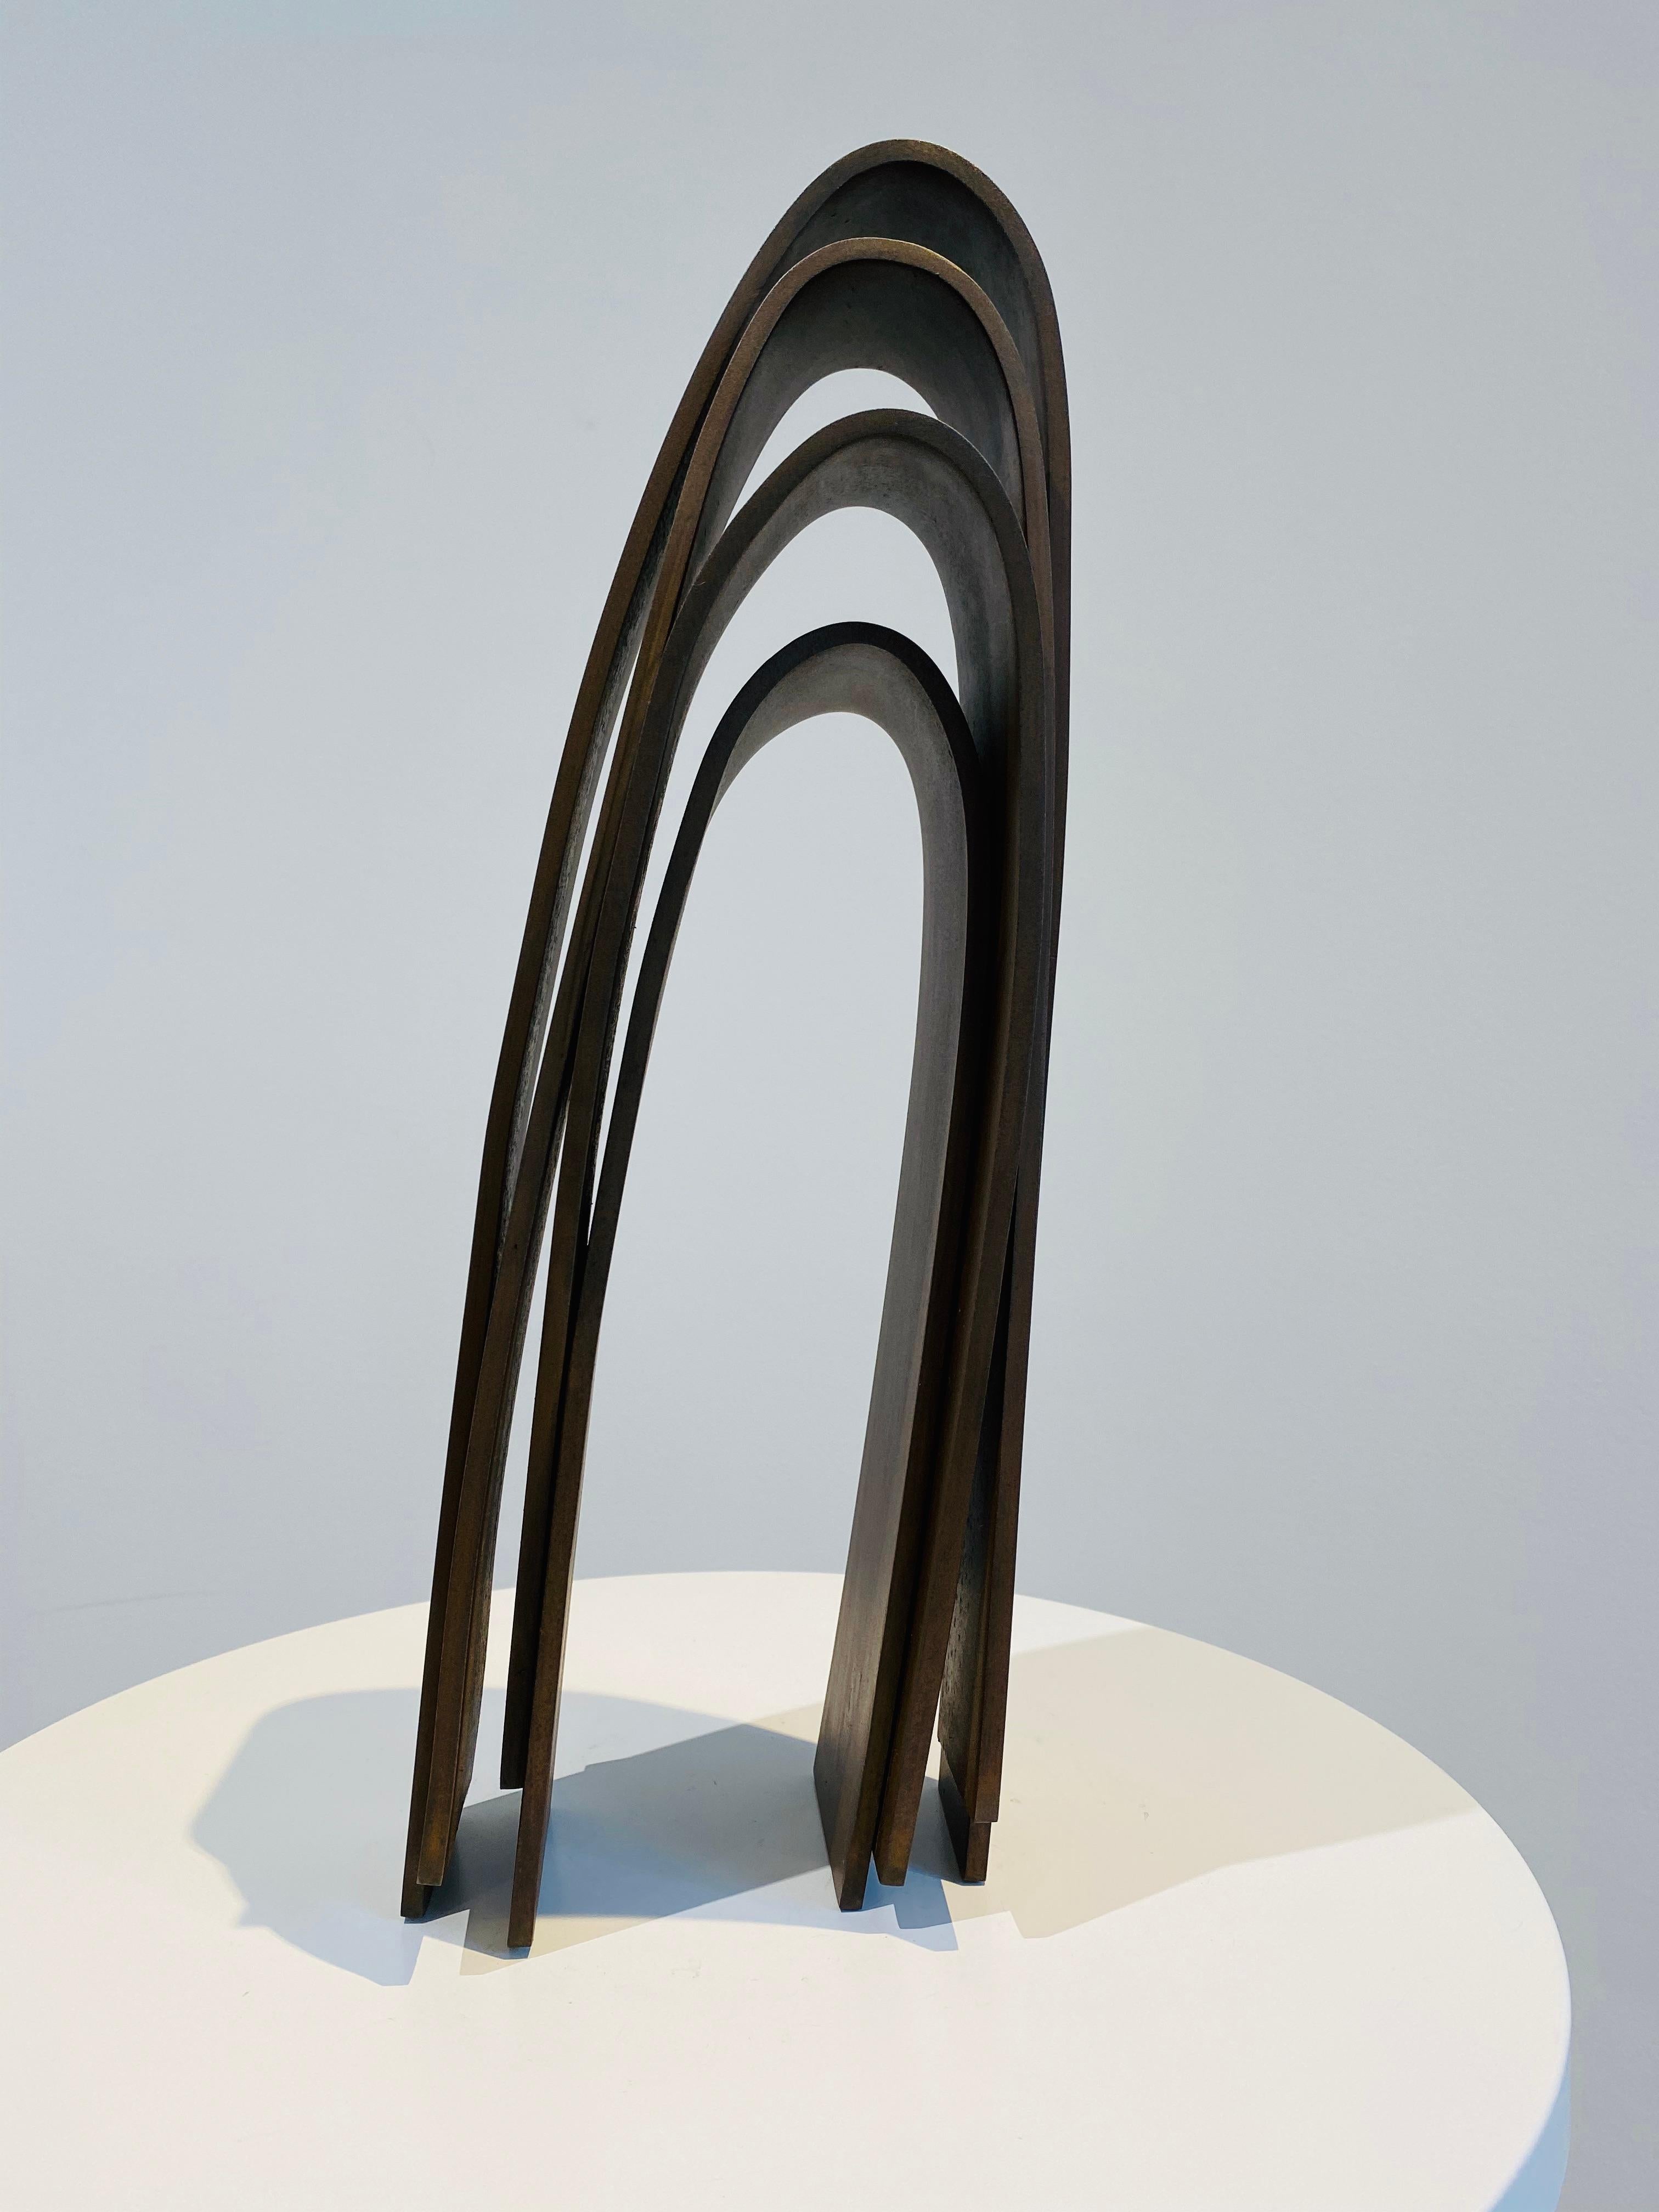 Etienne Viard Abstract Sculpture - Honoré, 2017, corten steel sculpture, abstract, rust, minimalism, arcs